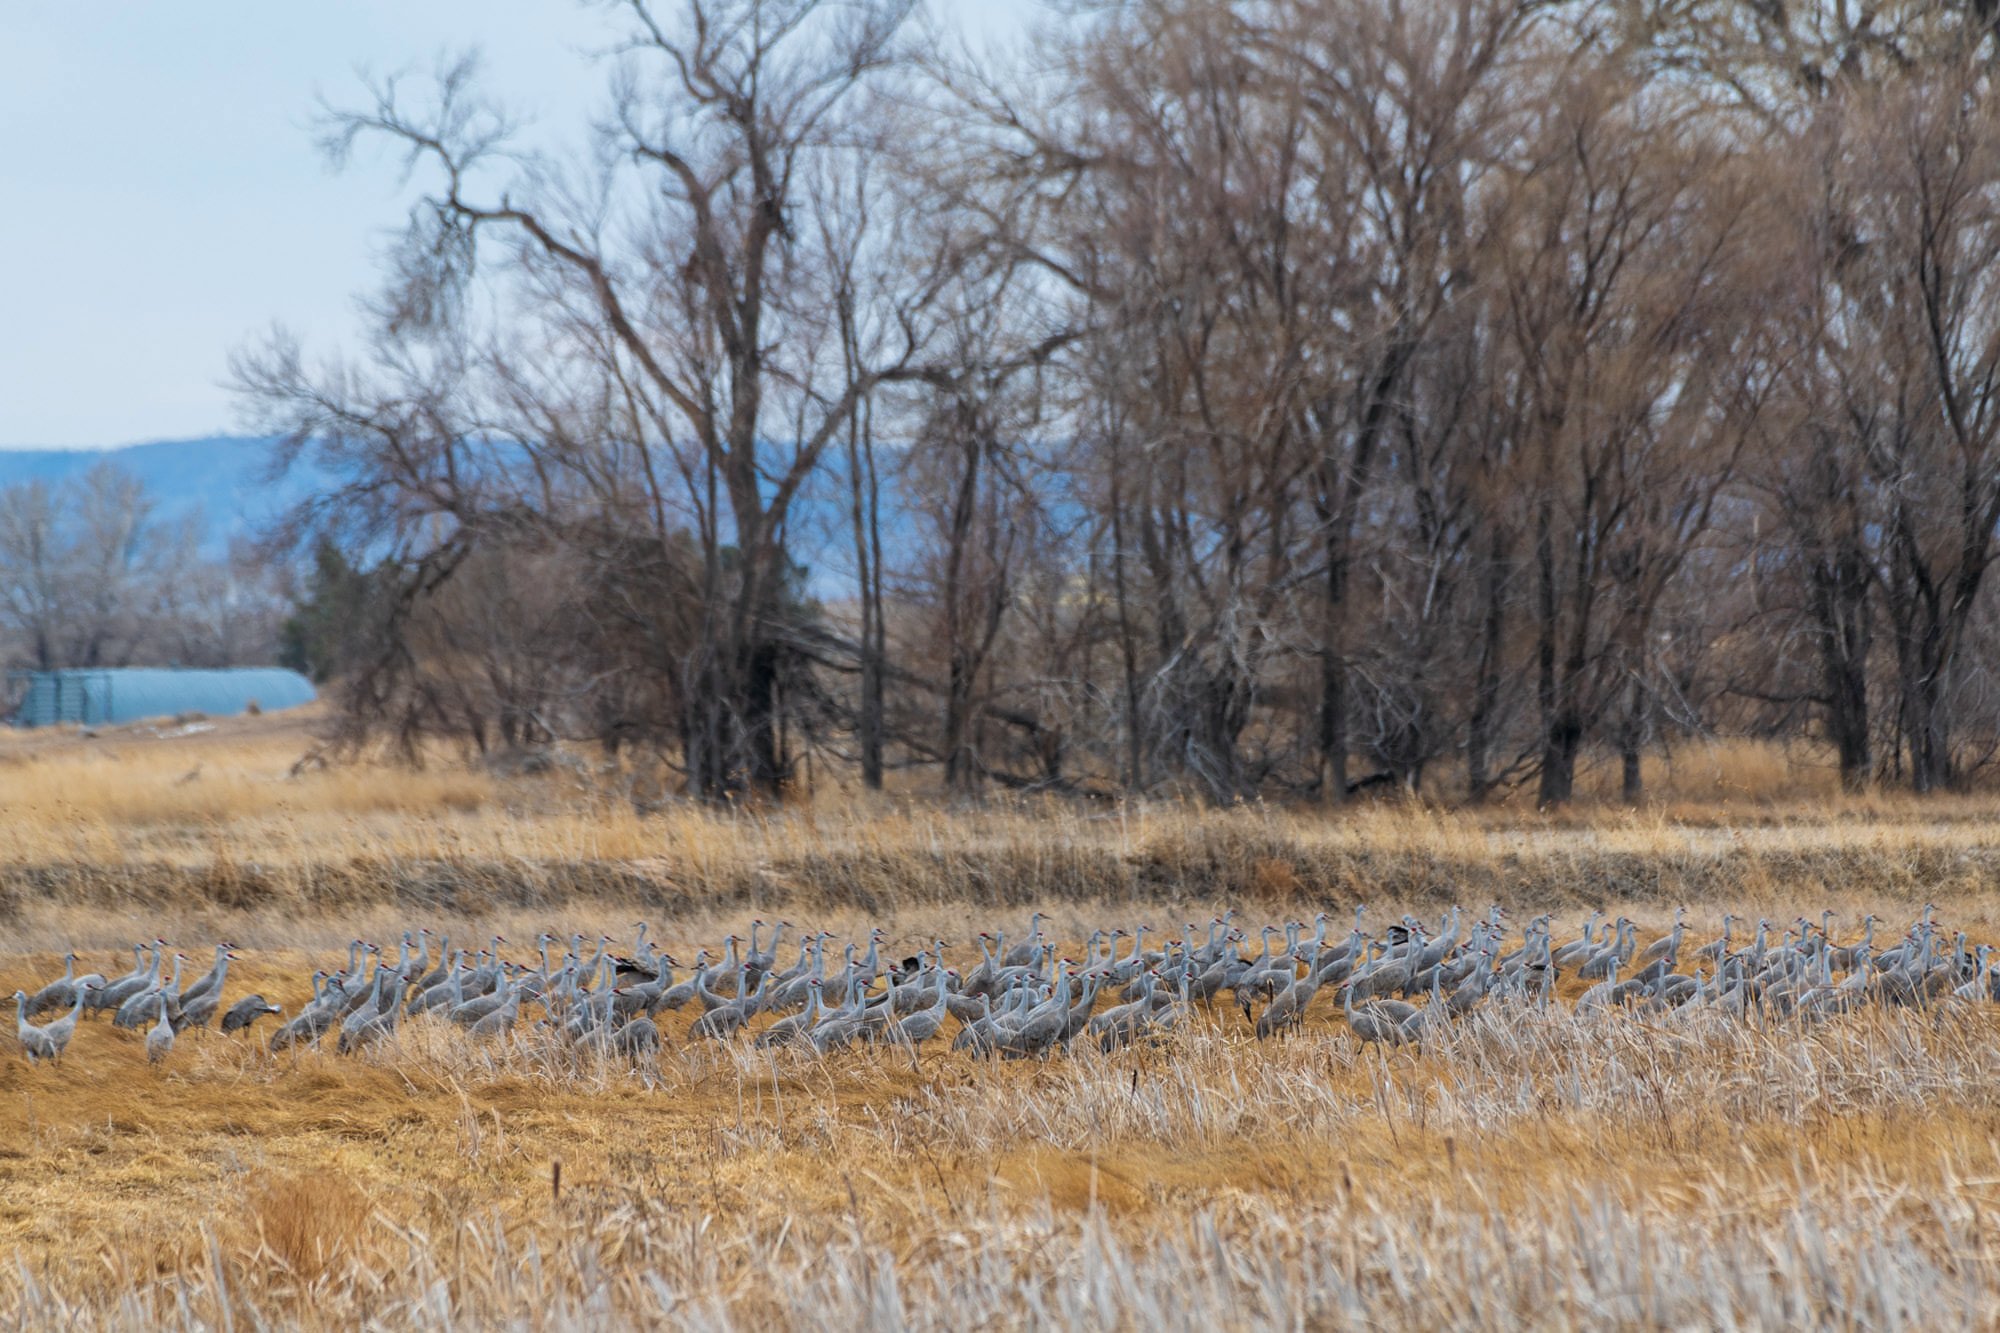 Sandhill cranes gathering near a farm in western Nebraska. © Hawk Buckman